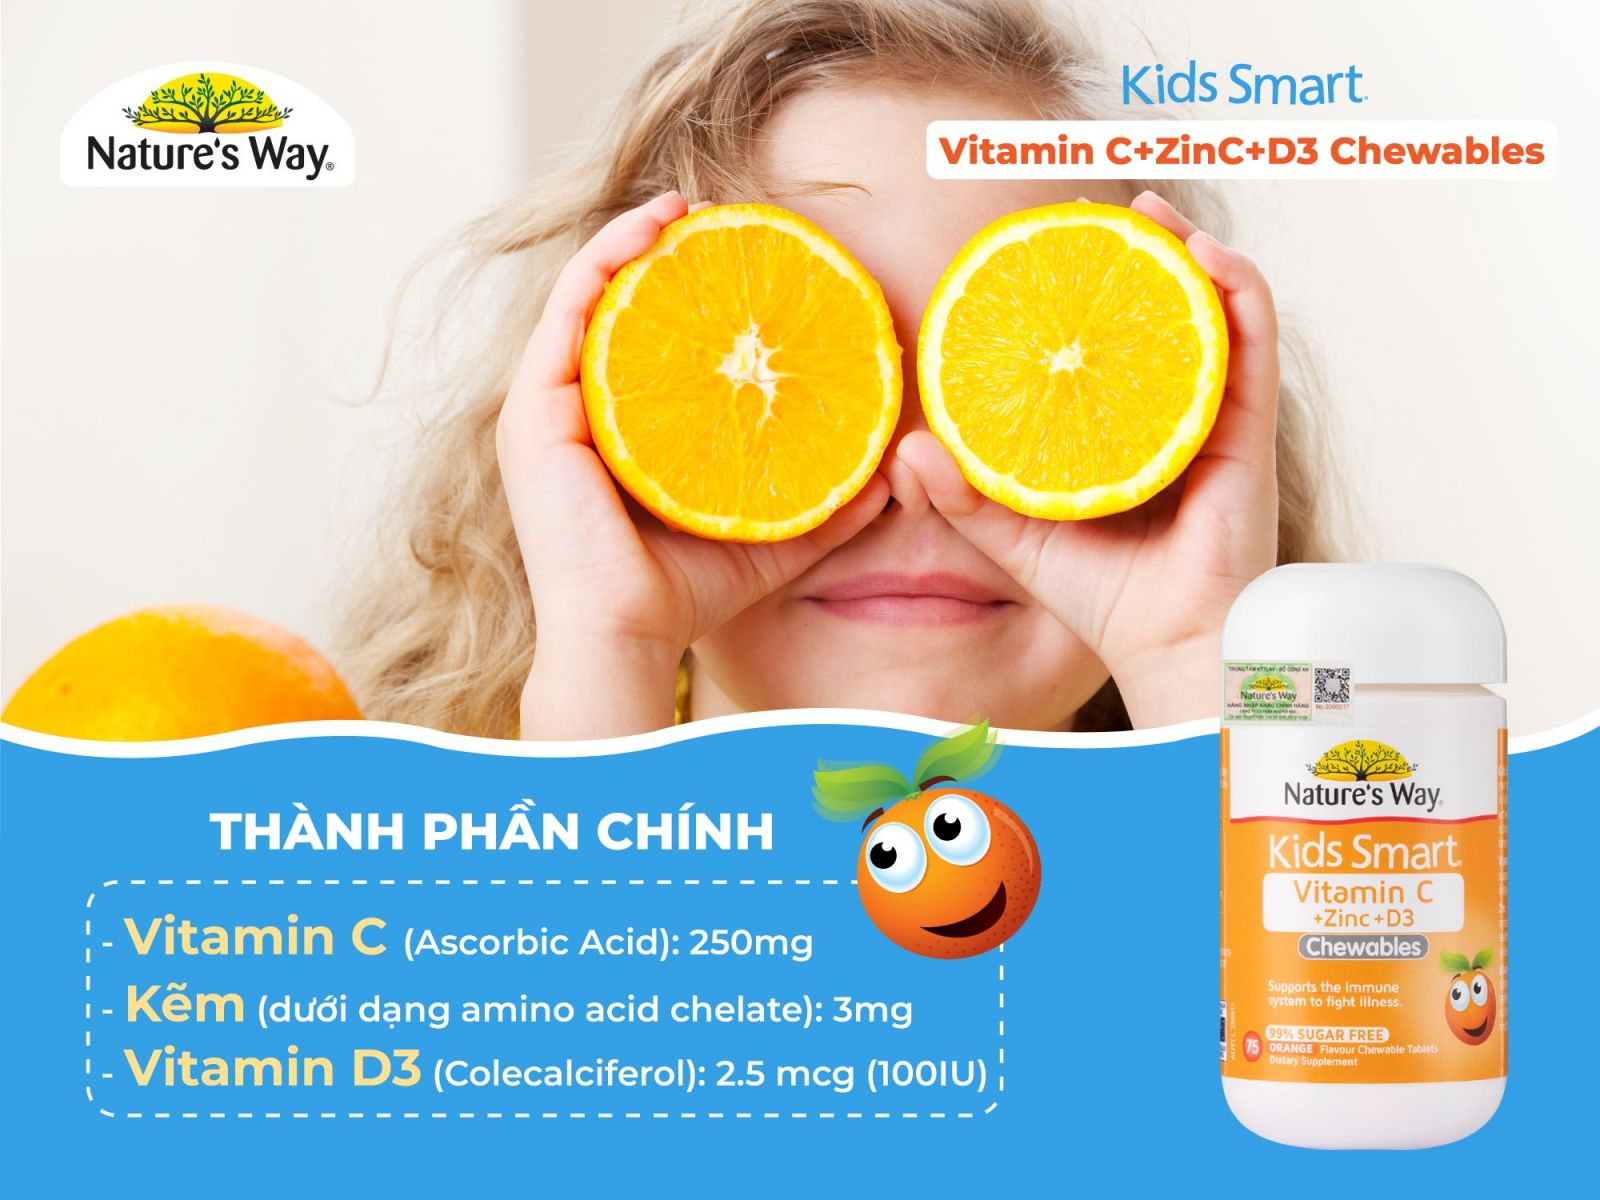 Nature’s Way Kids Smart Vitamin C + Zinc + D3 Chewable Tablets - Bổ sung Vitamin C và Kẽm cho bé